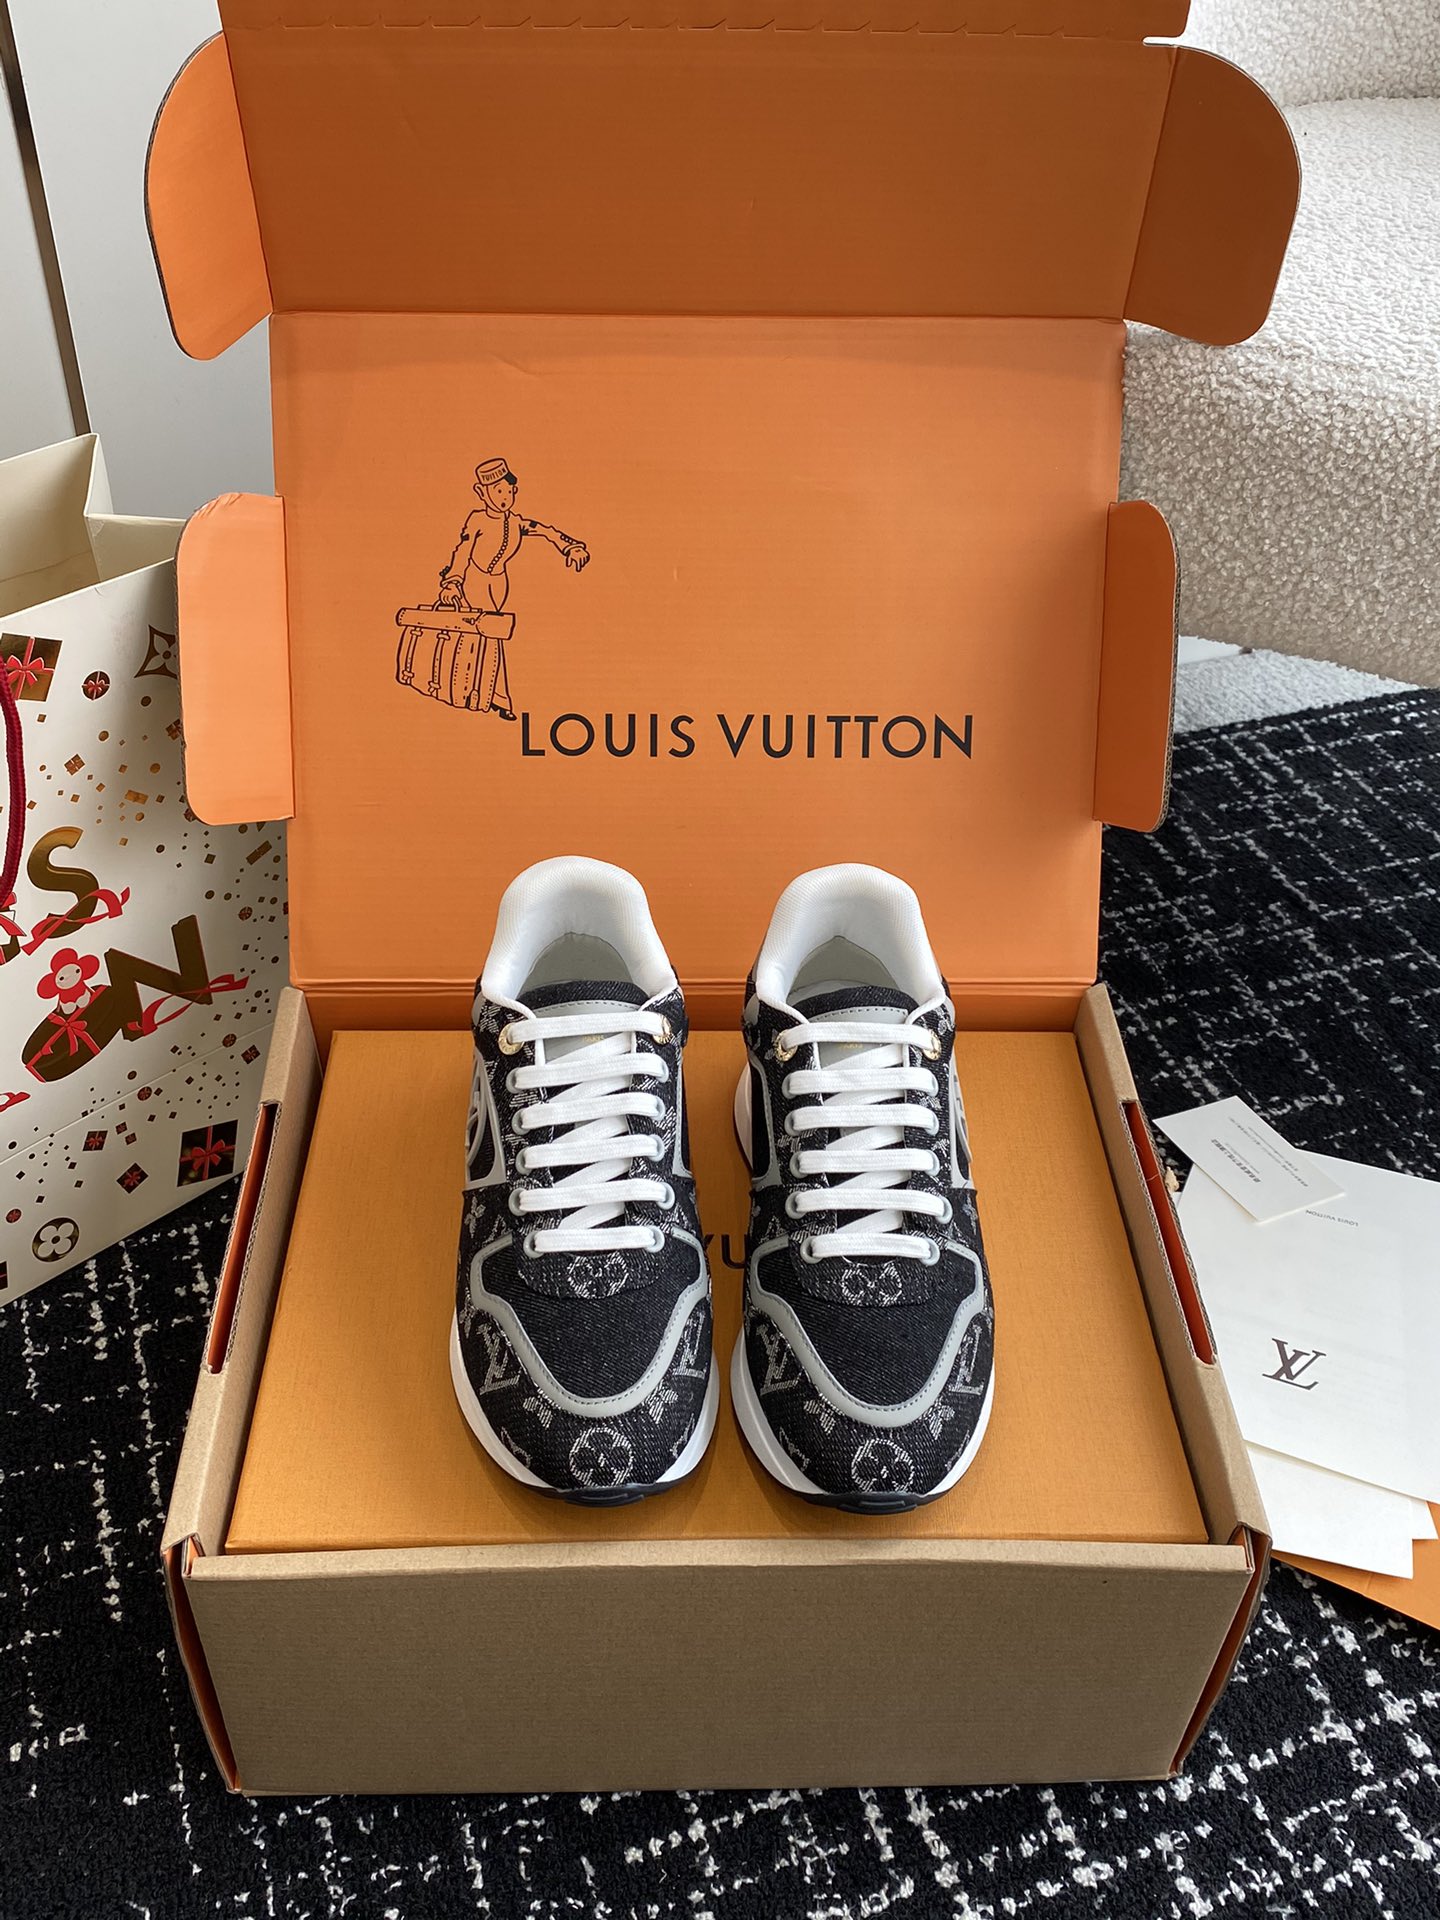 1:1
 Louis Vuitton Shoes Sneakers Unisex Spring/Summer Collection Sweatpants